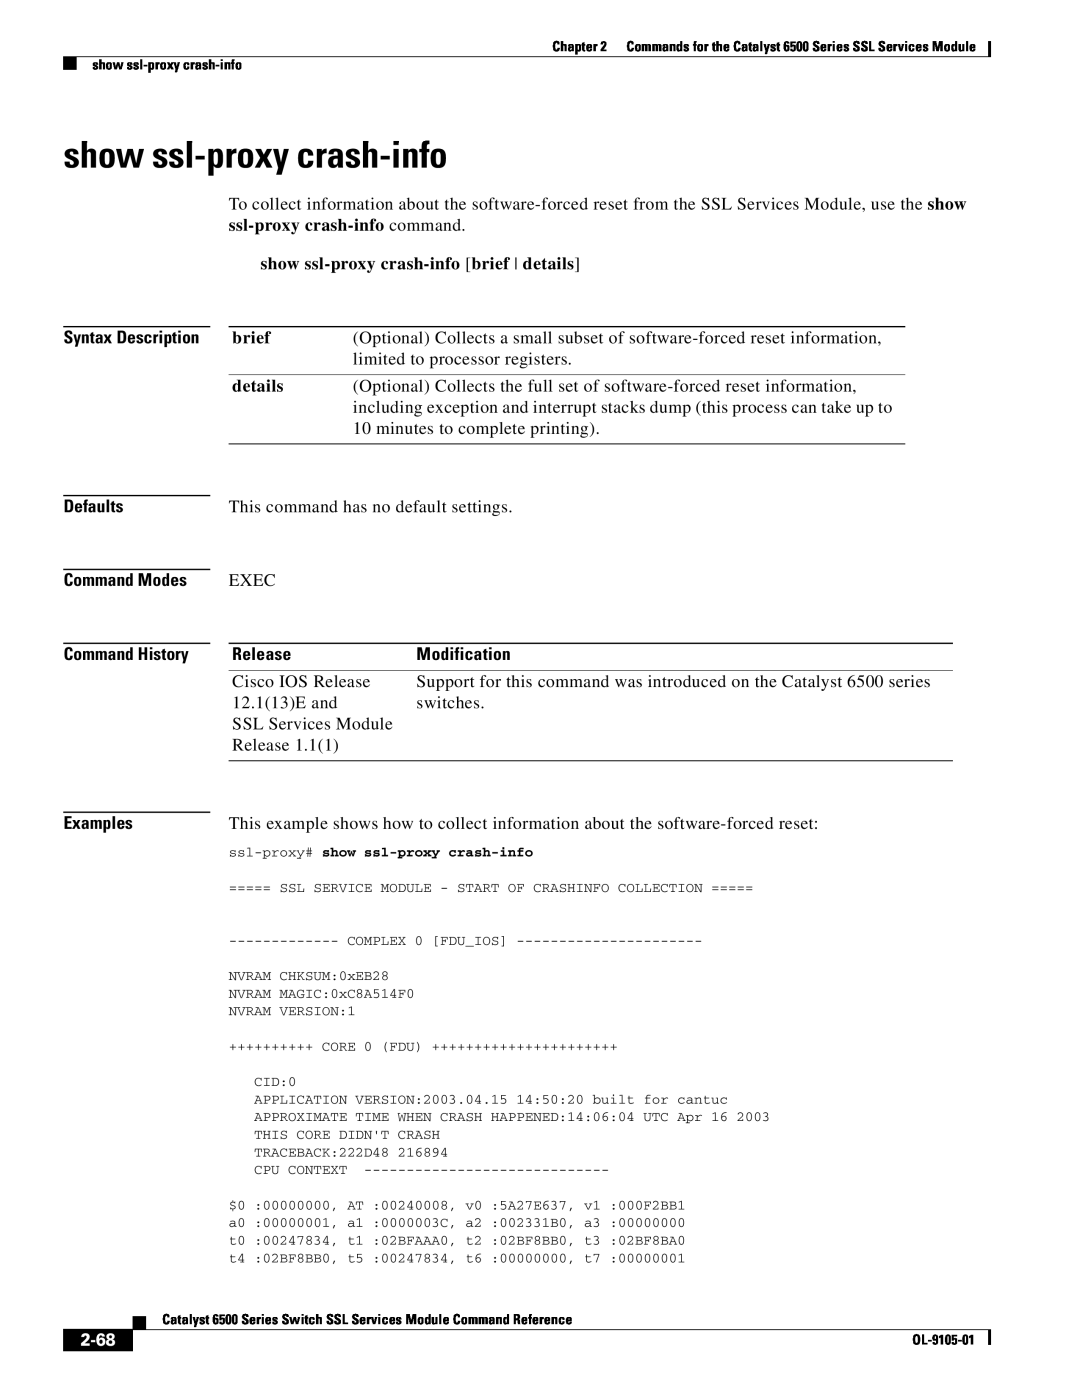 Cisco Systems 6500 show ssl-proxy crash-info brief details, 2-68, Defaults, Command Modes Command History, Release 